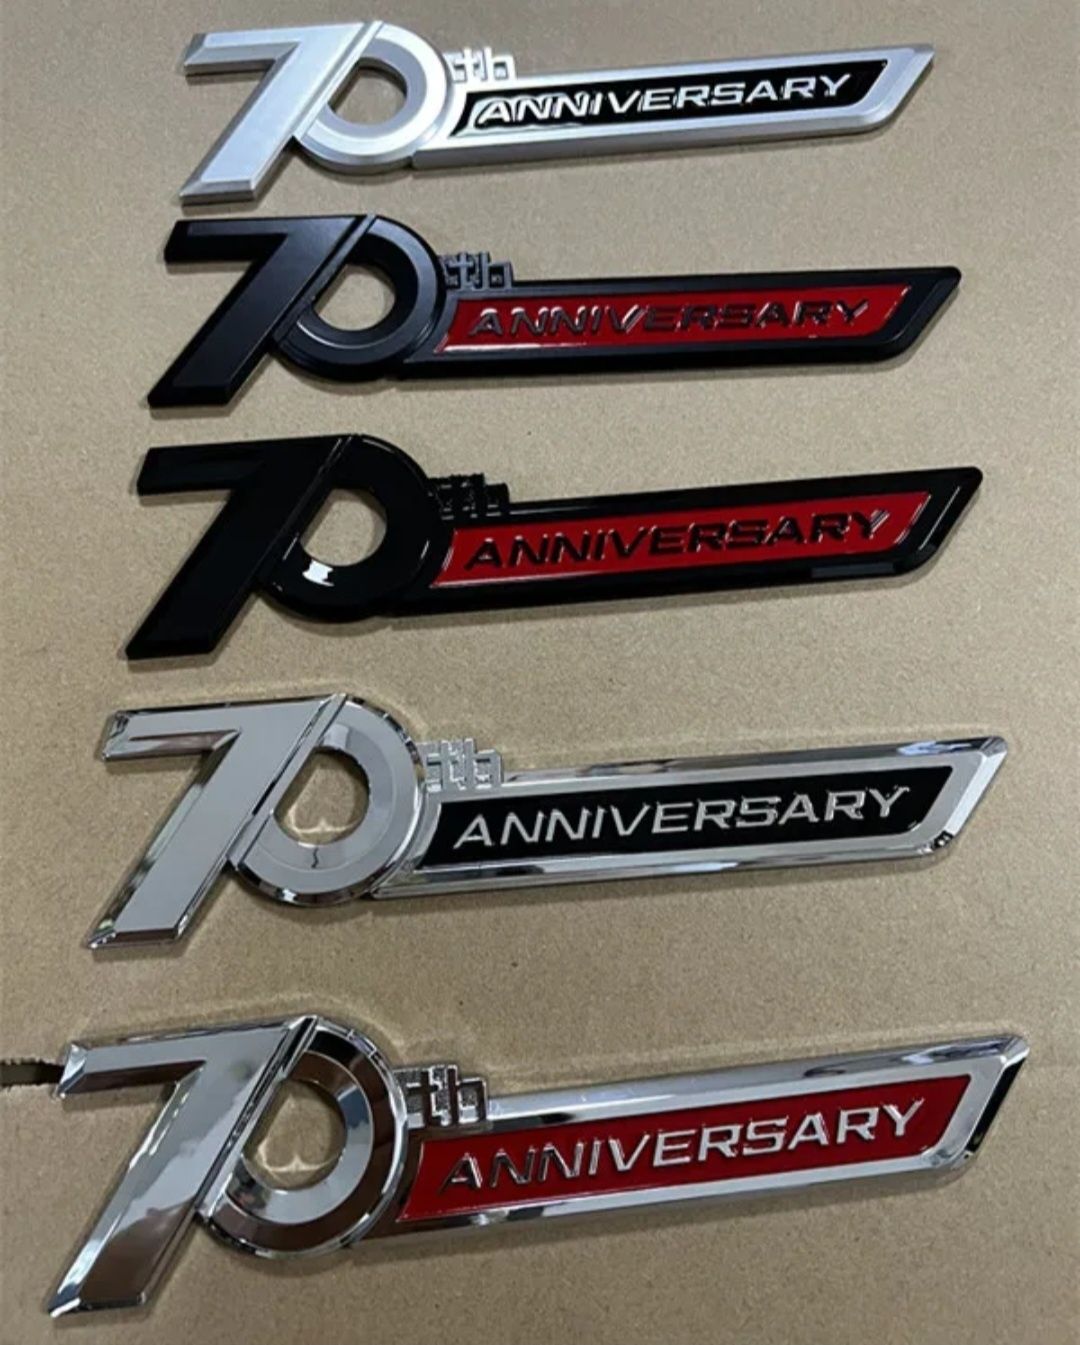 Эмблема шыльдик значок надпись 70th Anniversary на Toyota Land Cruiser